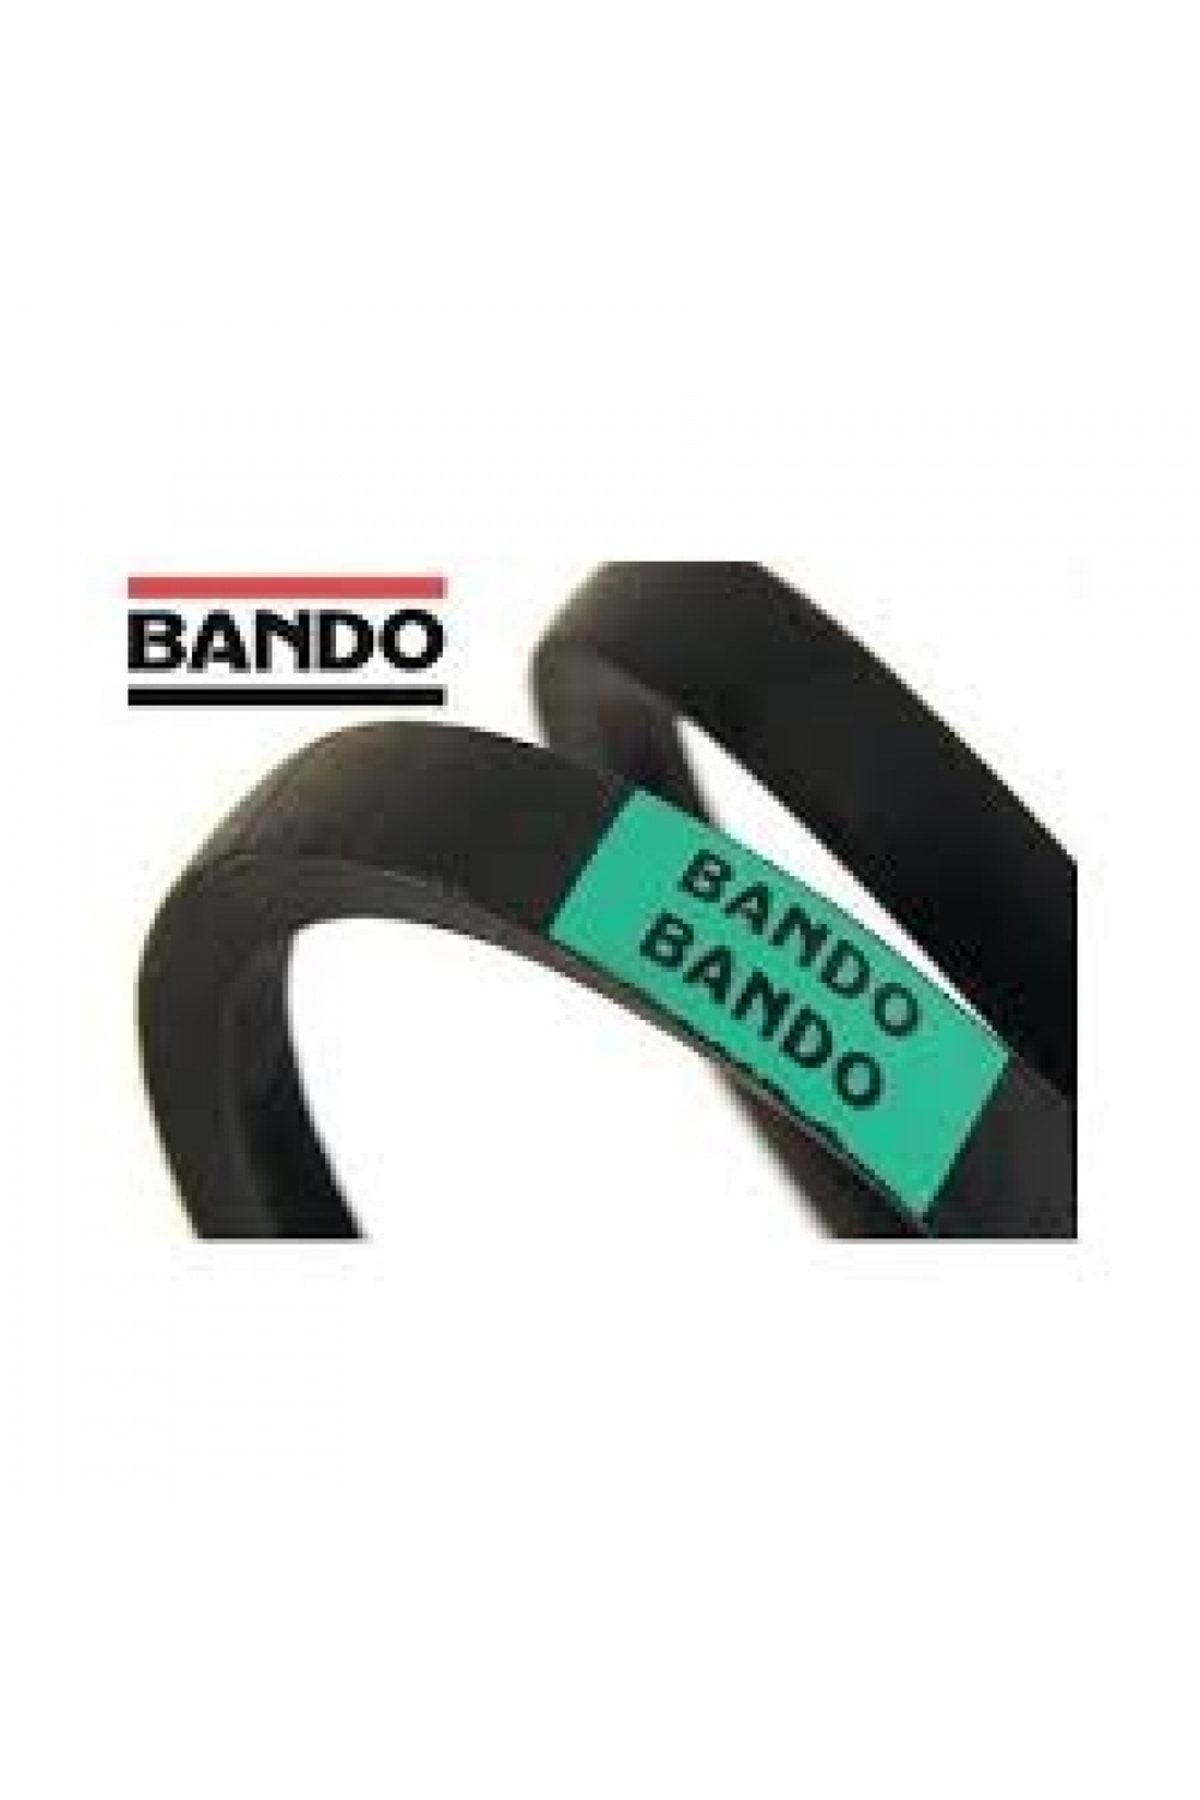 Bando V Kayısı / / 10x1250-